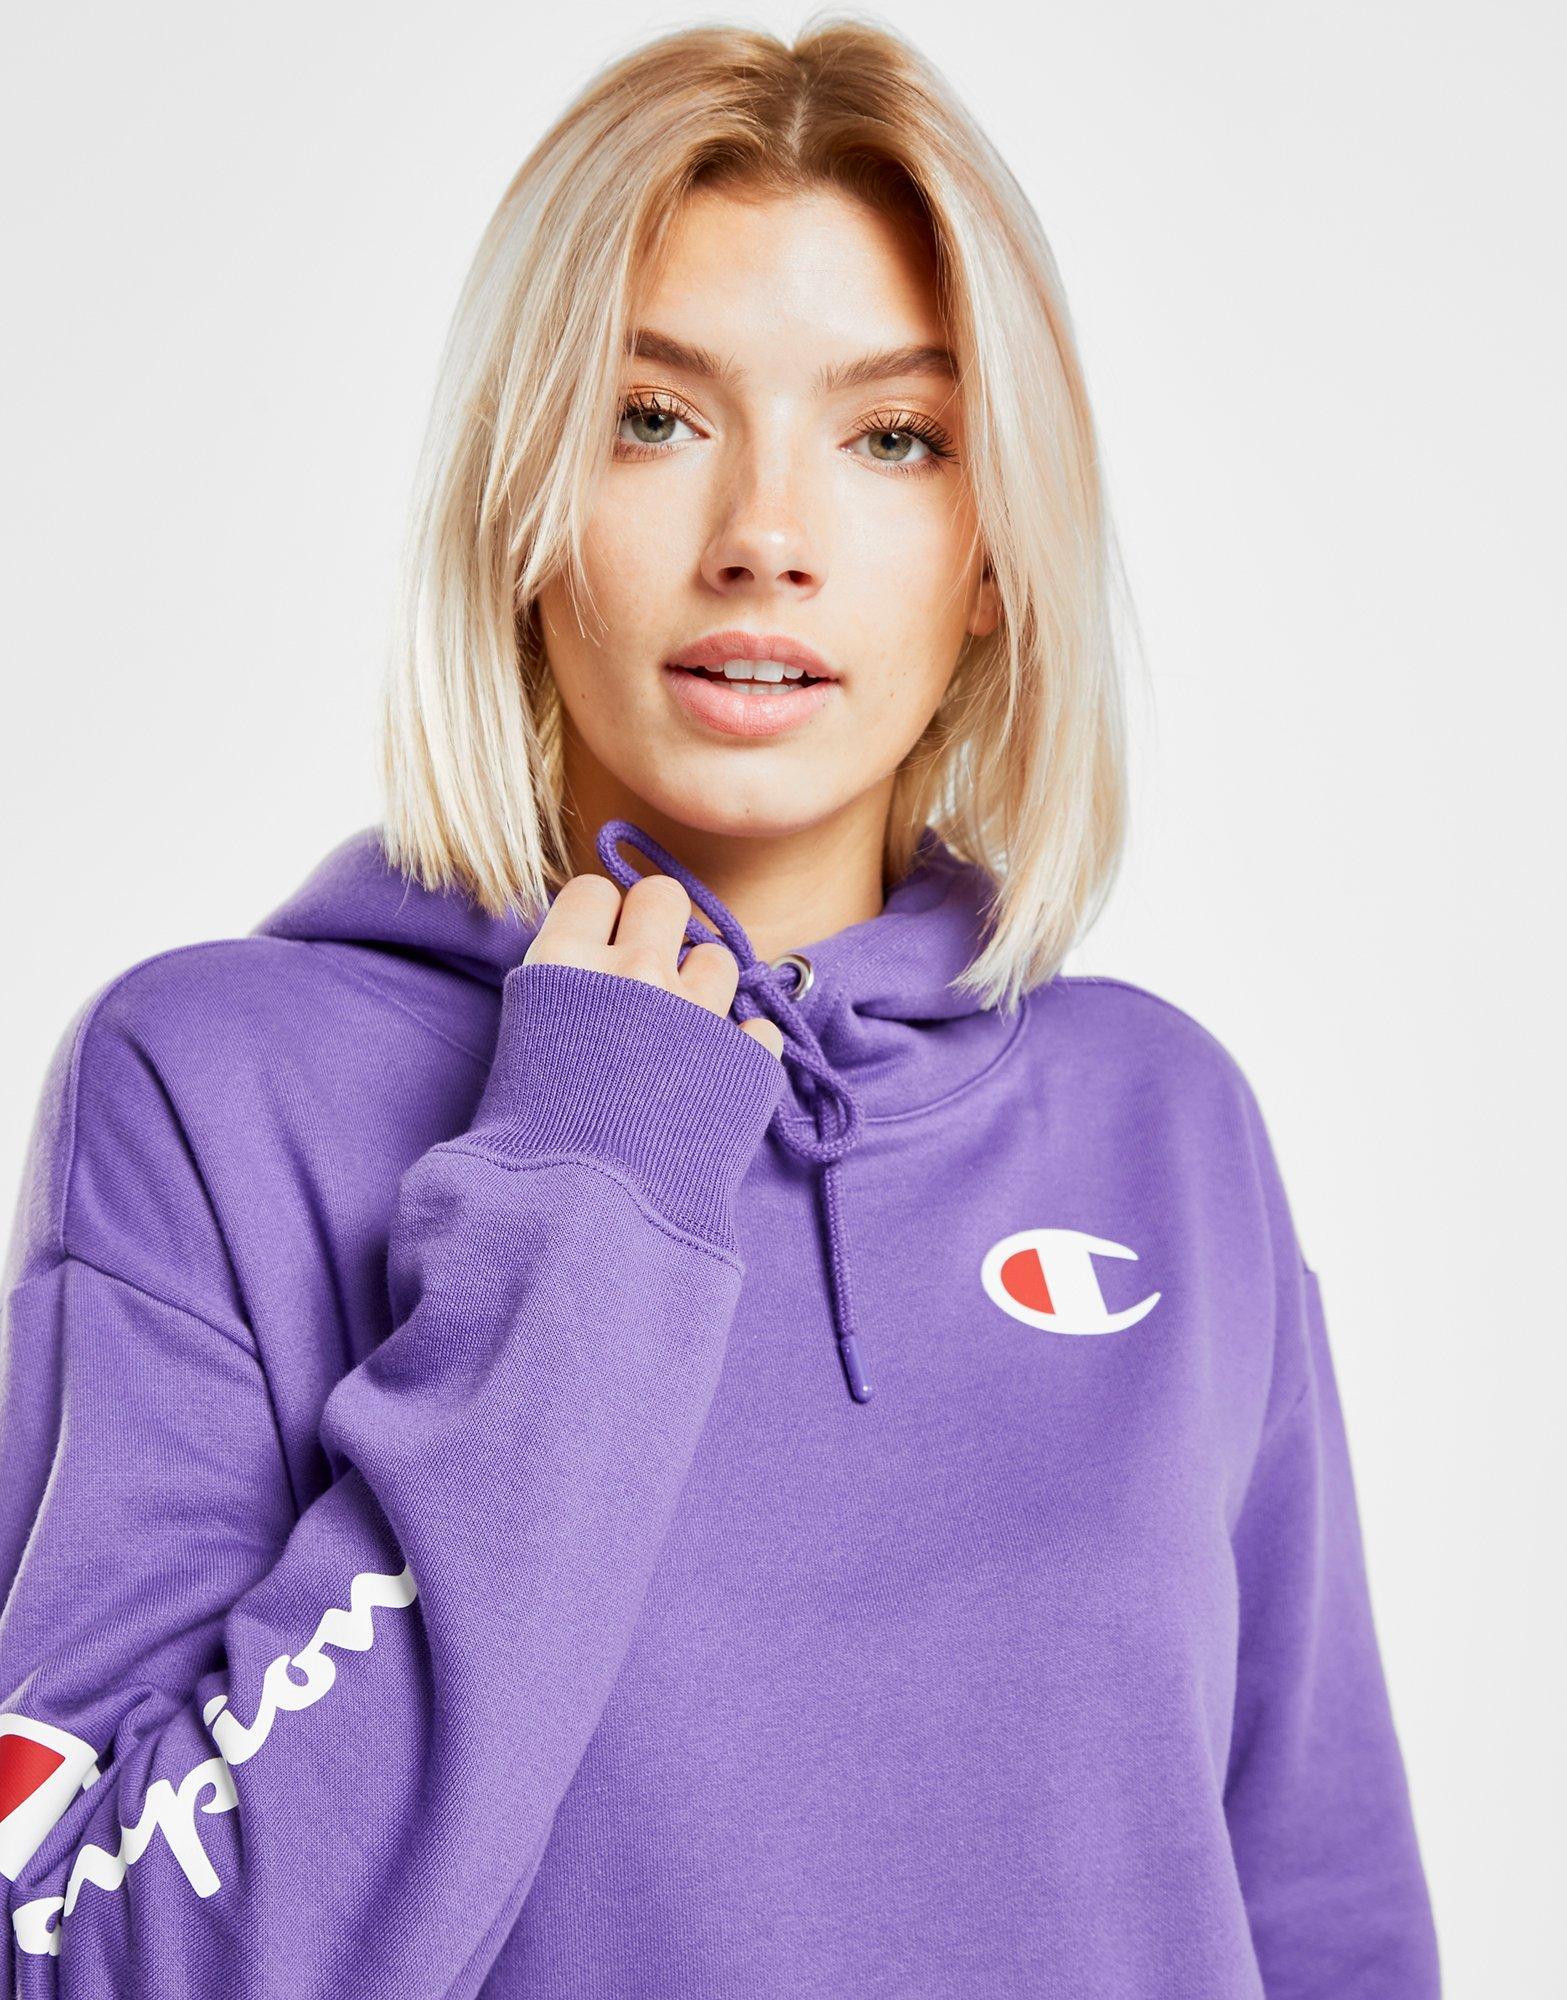 champion purple hoodie women's